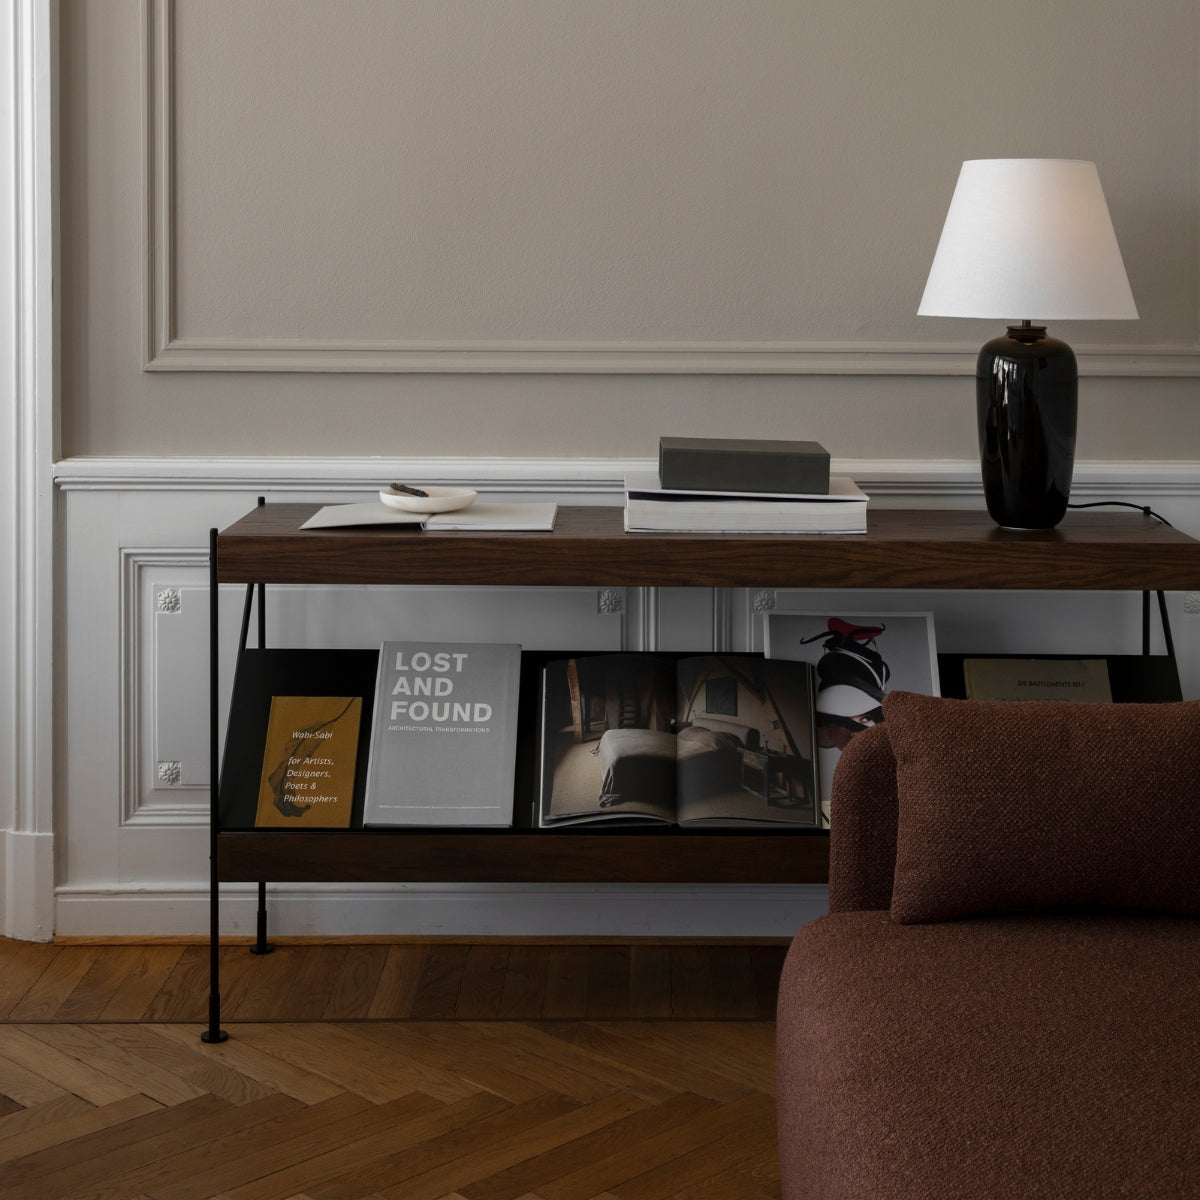 Audo Copenhagen | Torso Table Lamp, Black, 57